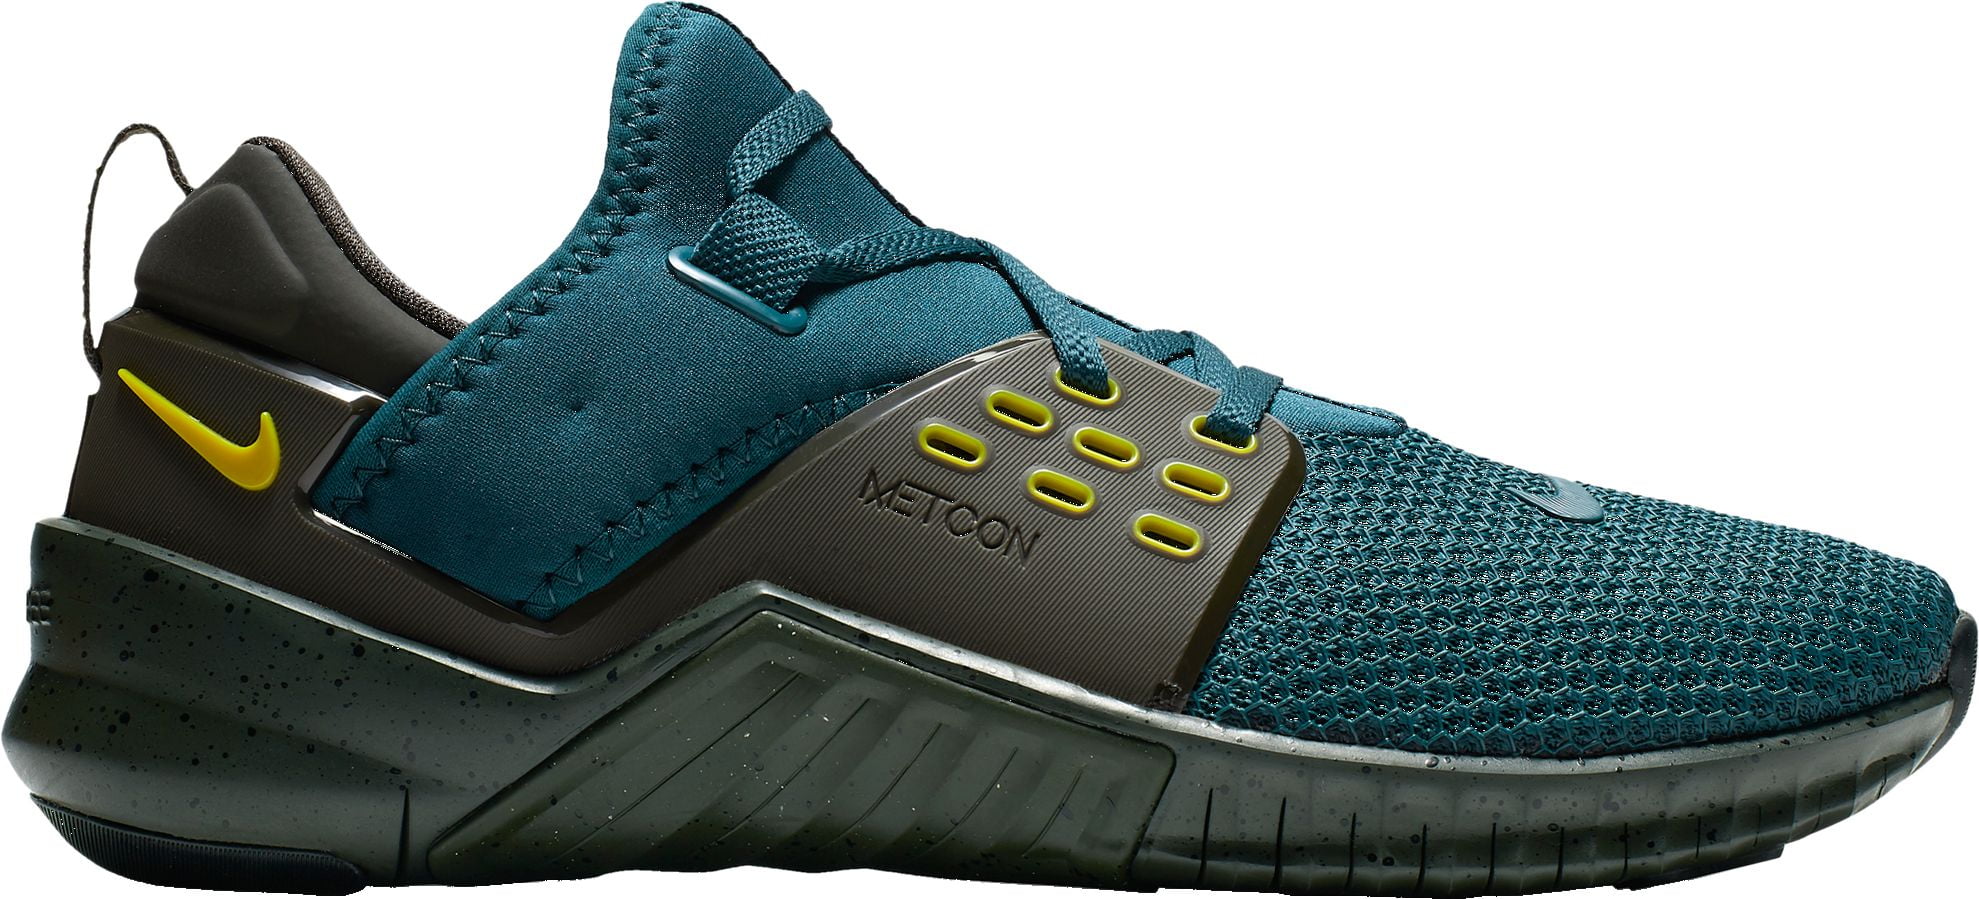 Nike - Nike Men's Free X Metcon 2 Training Shoes - Walmart.com ...